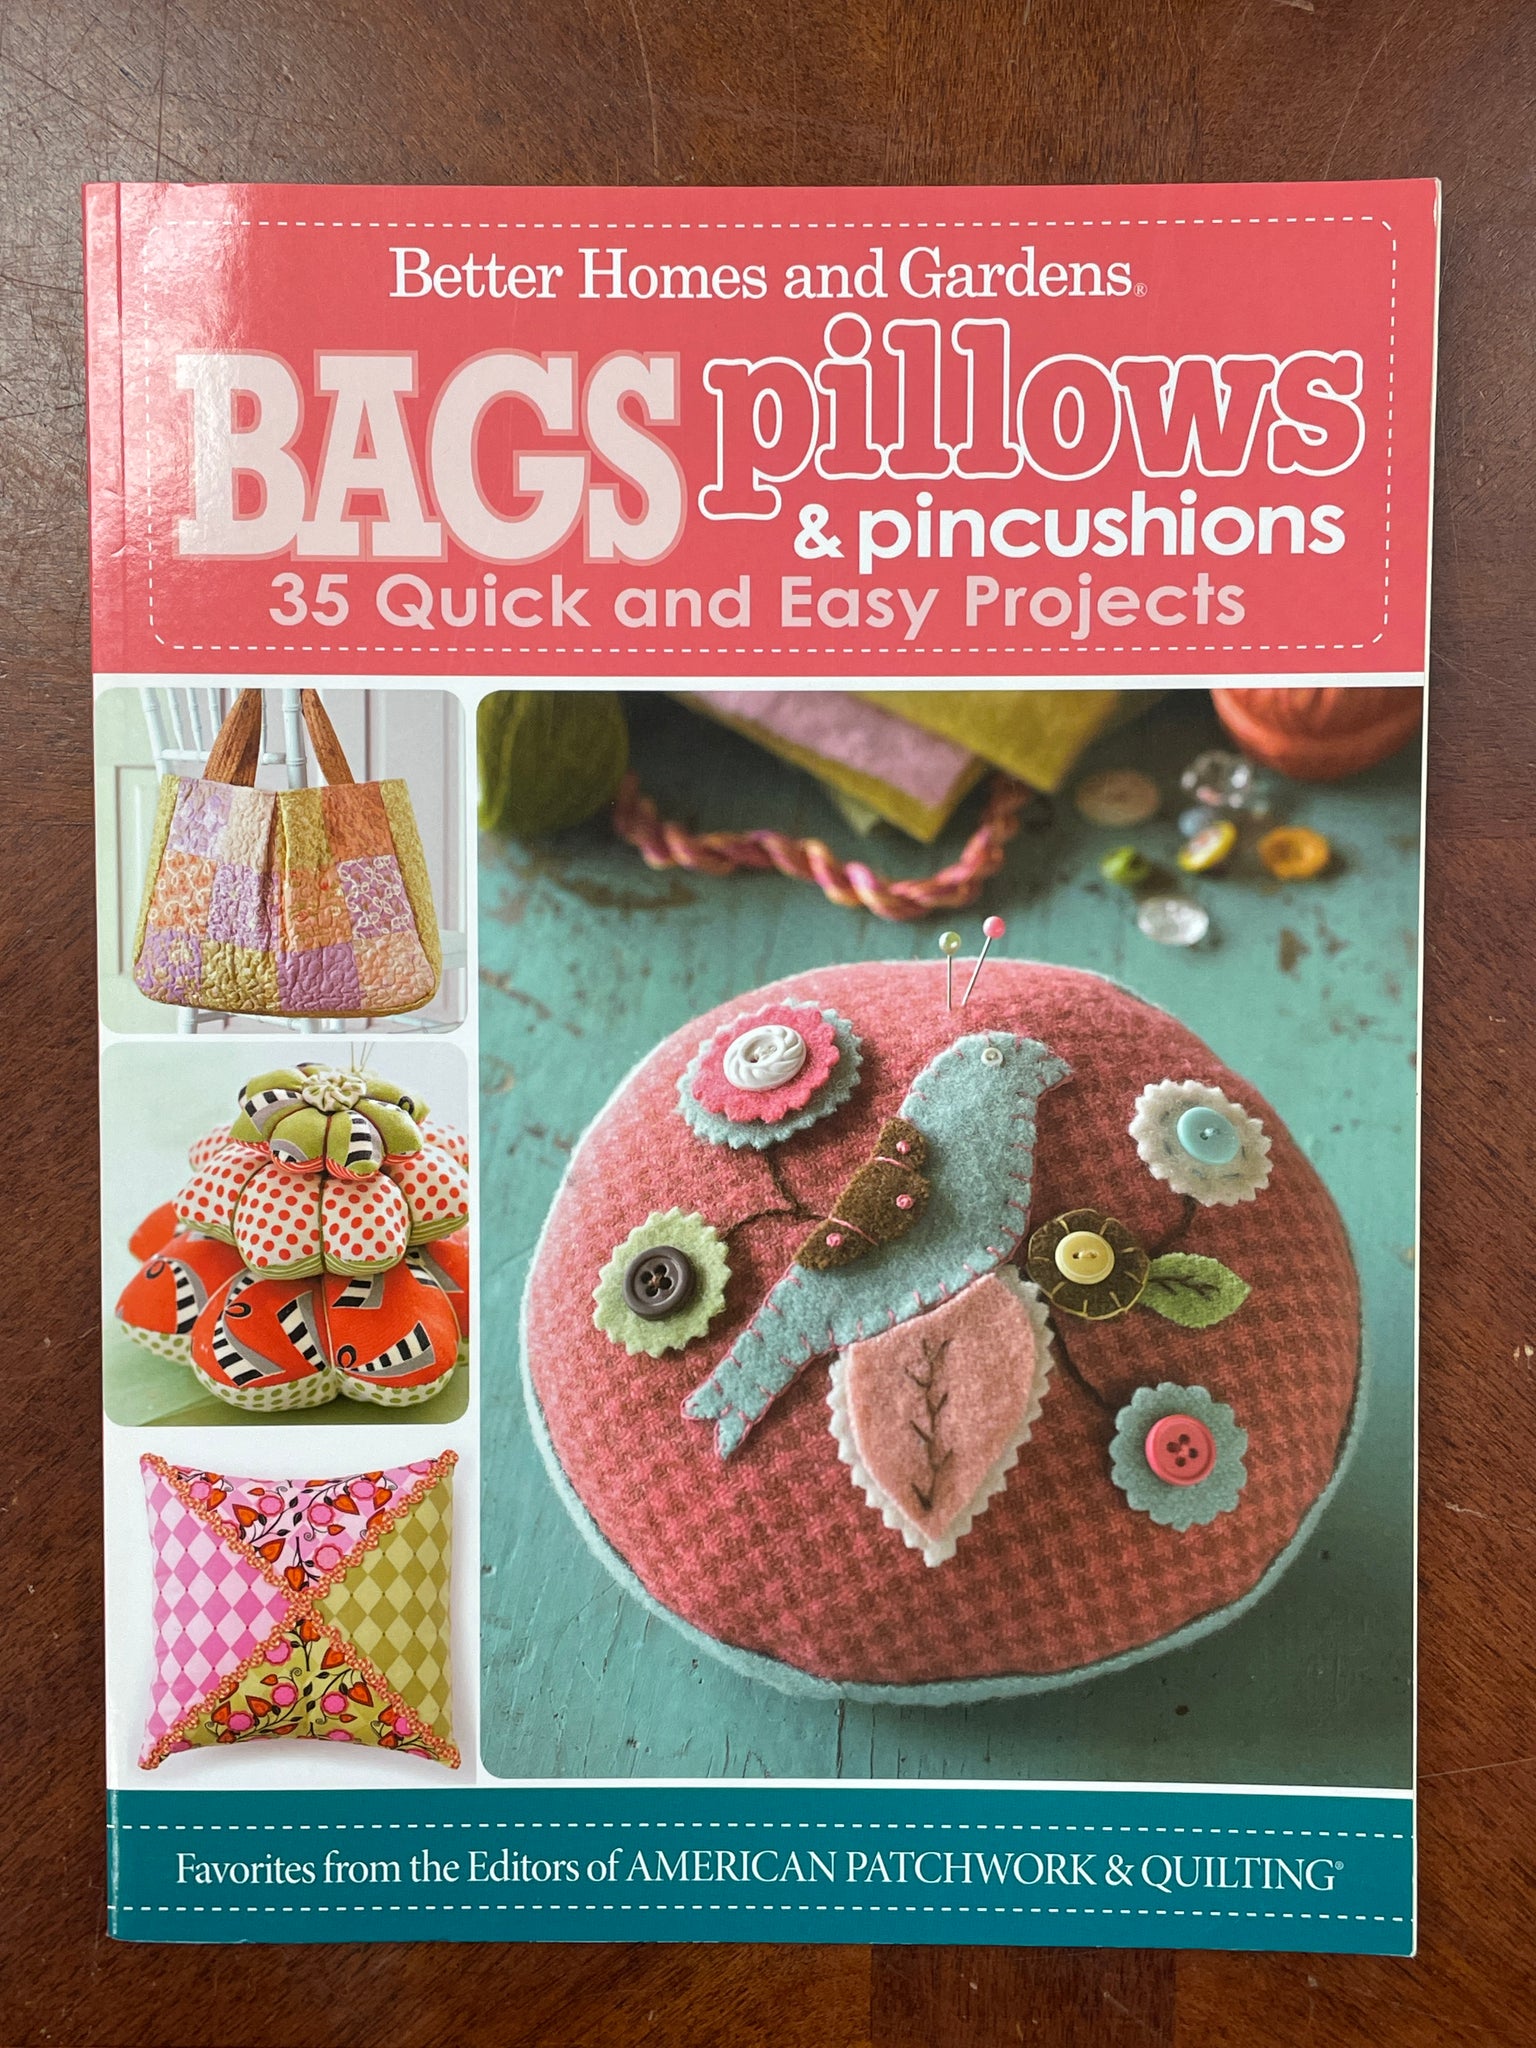 2011 Quilting Book - "Bags, Pillows & Pincushions"